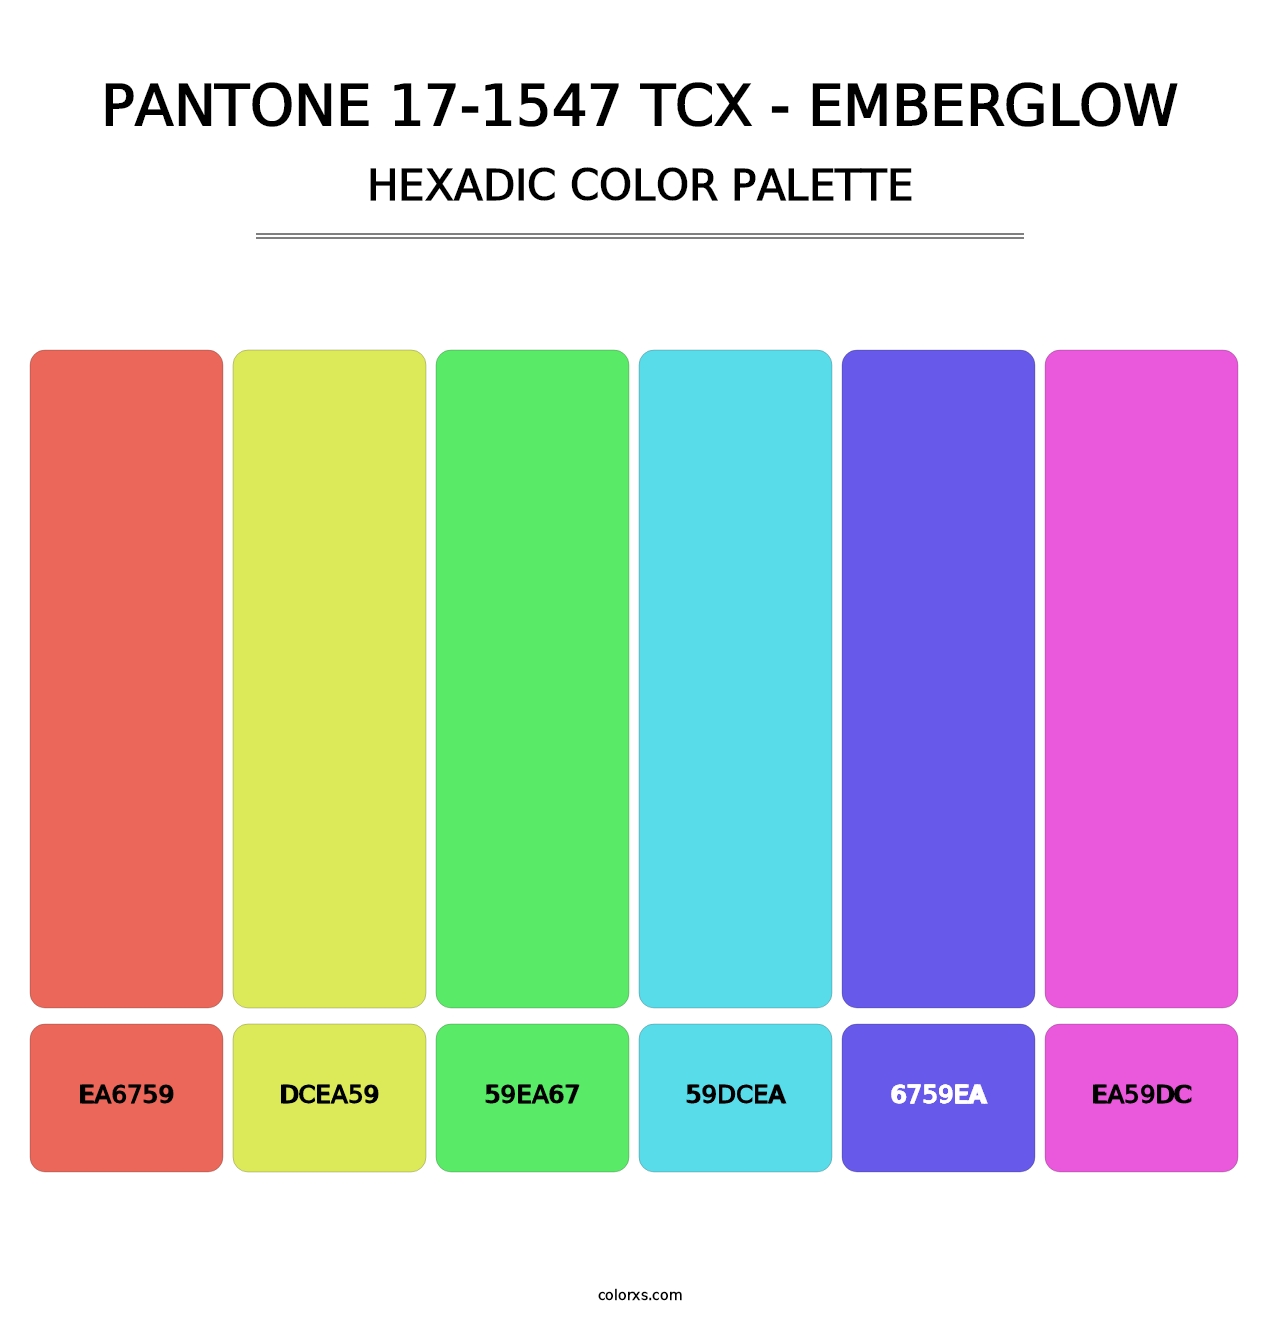 PANTONE 17-1547 TCX - Emberglow - Hexadic Color Palette